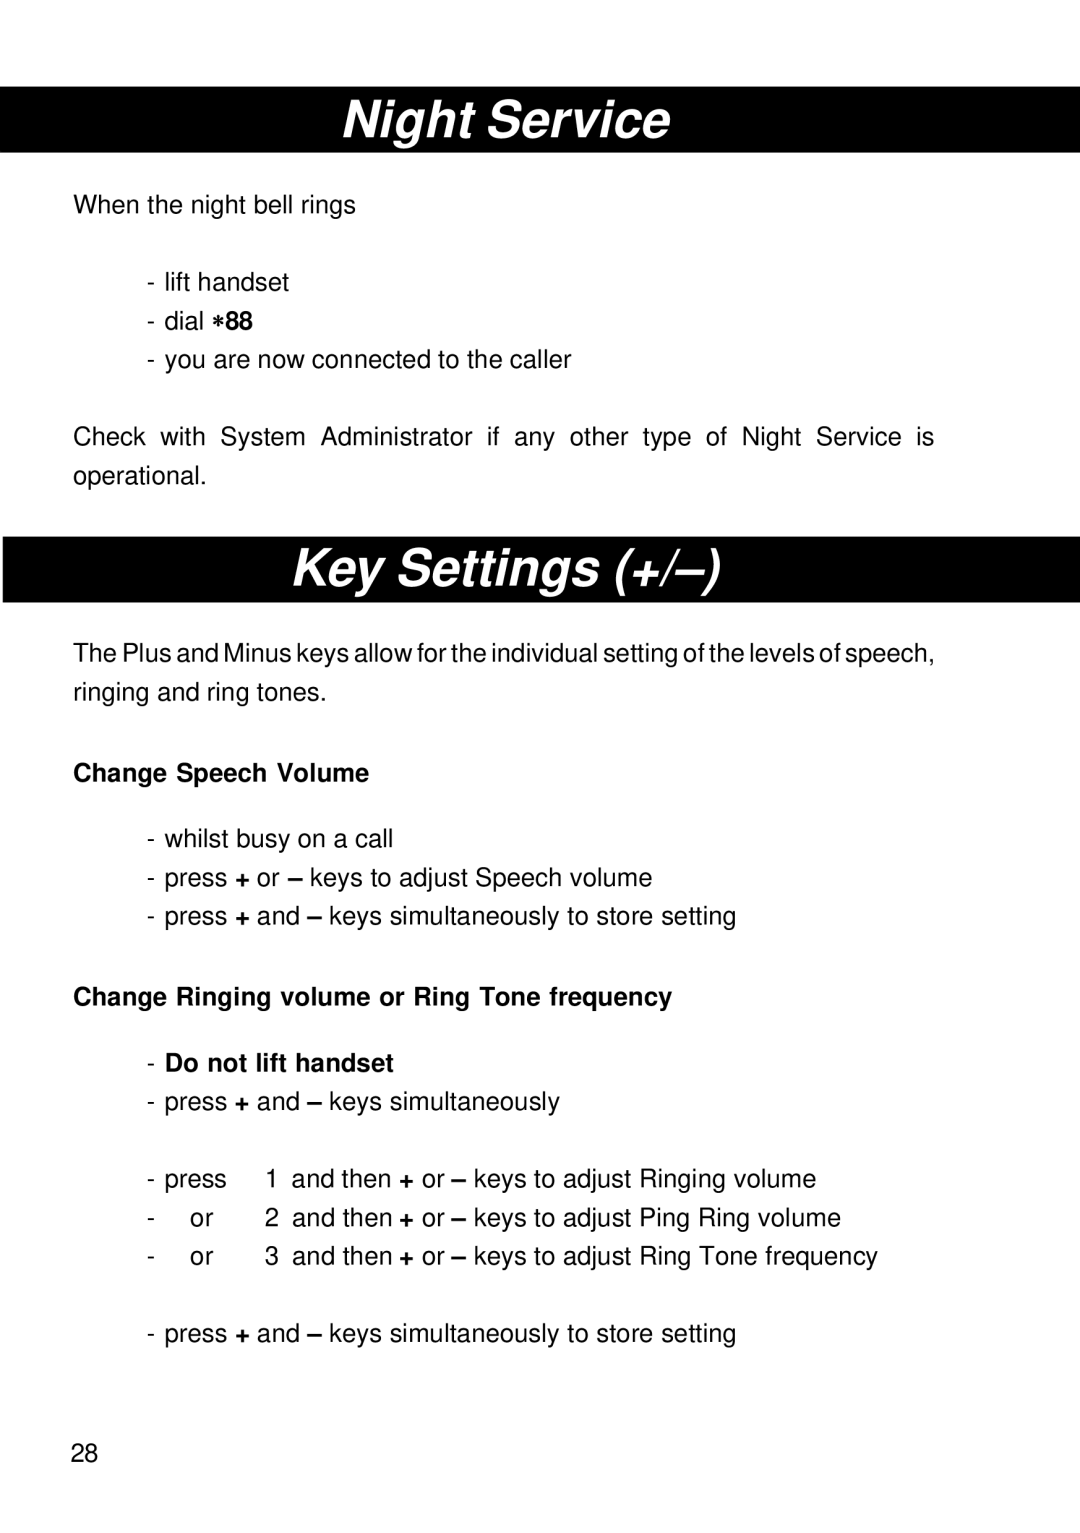 Siemens 300 operating instructions Night Service, Key Settings +, Change Speech Volume 